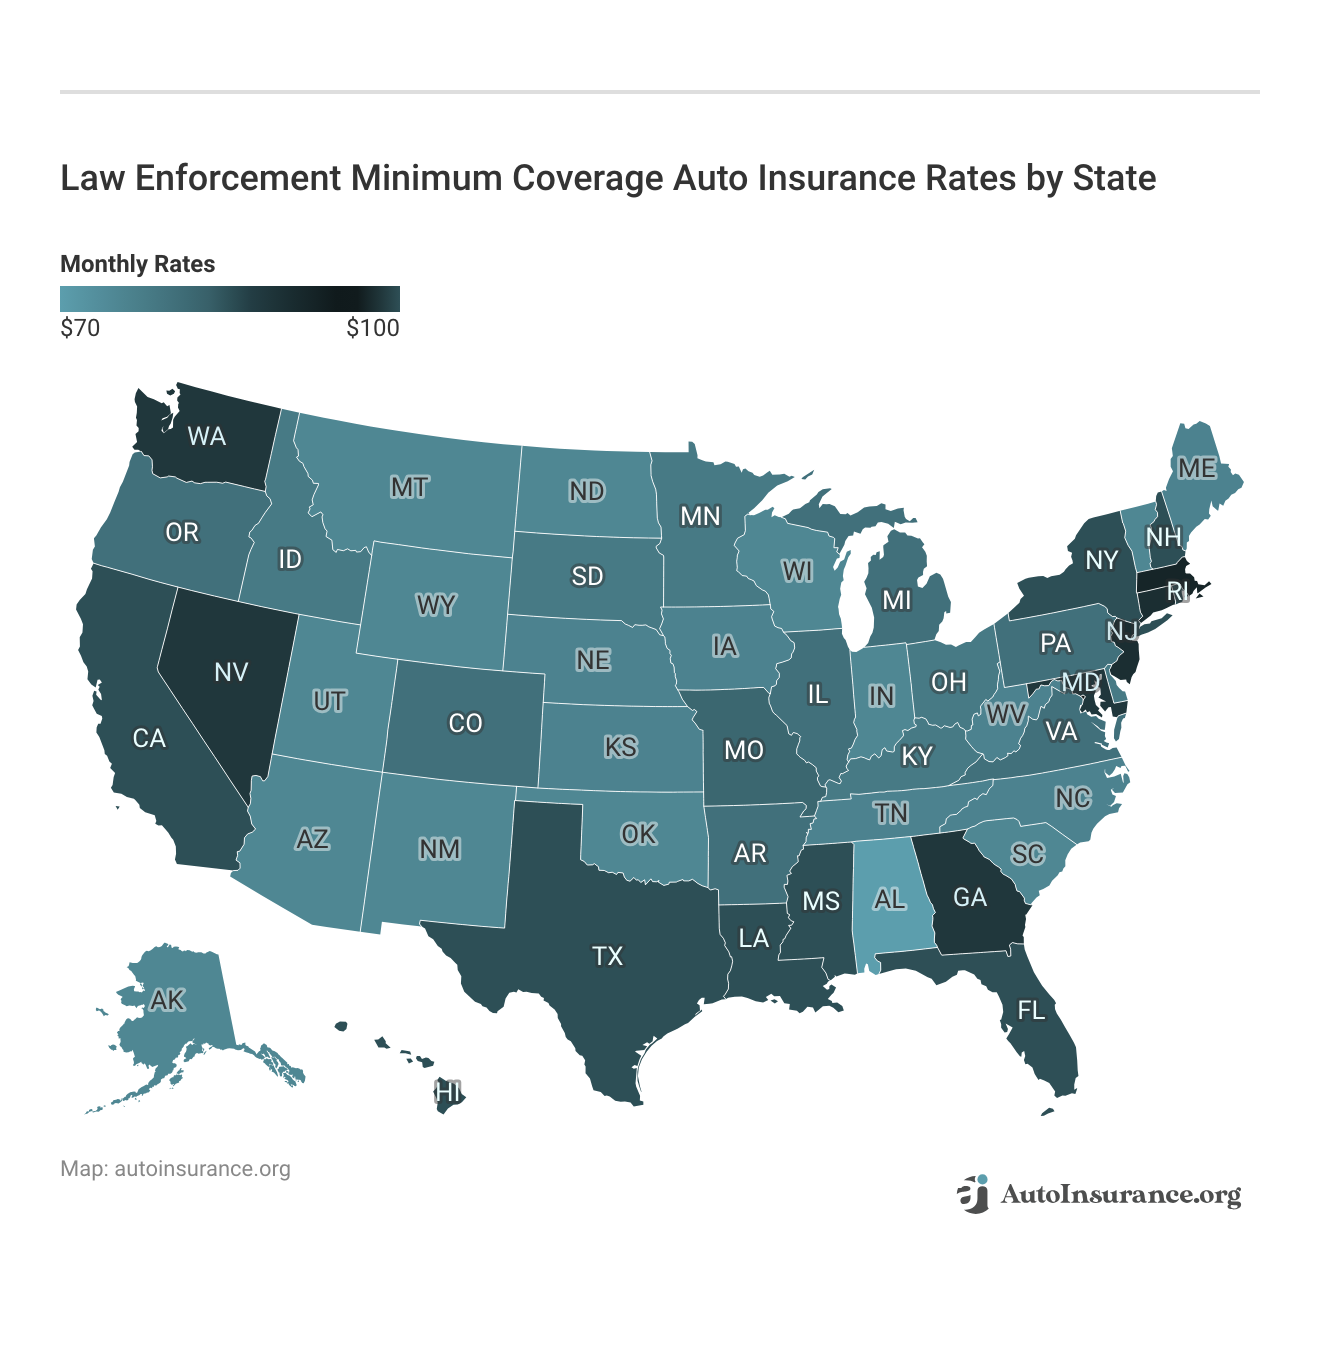 <h3>Law Enforcement Minimum Coverage Auto Insurance Rates by State</h3>